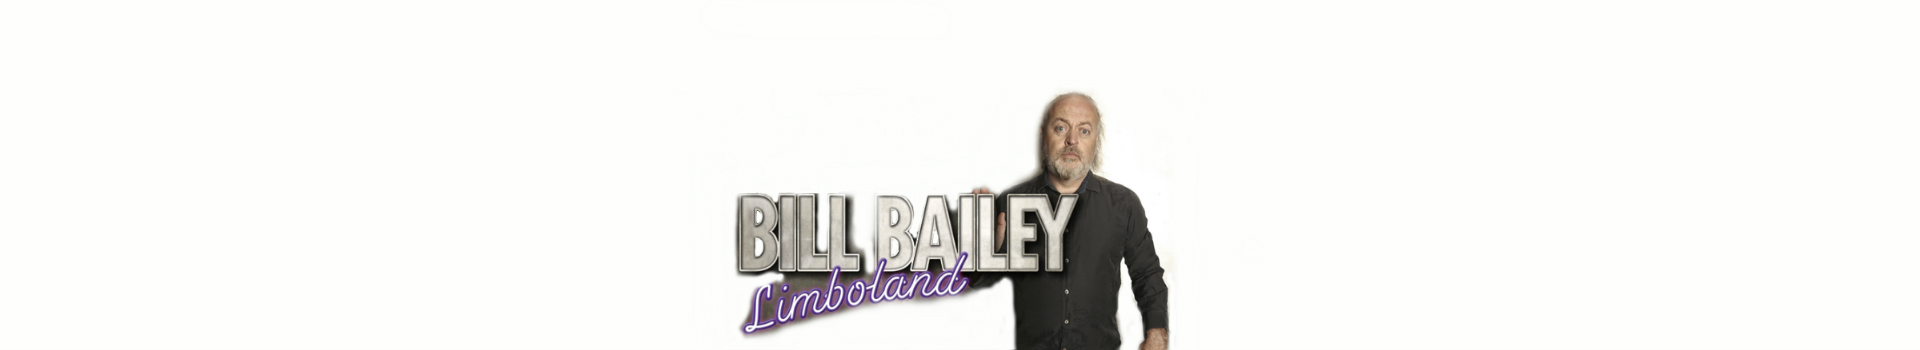 Bill Bailey : Limboland banner image